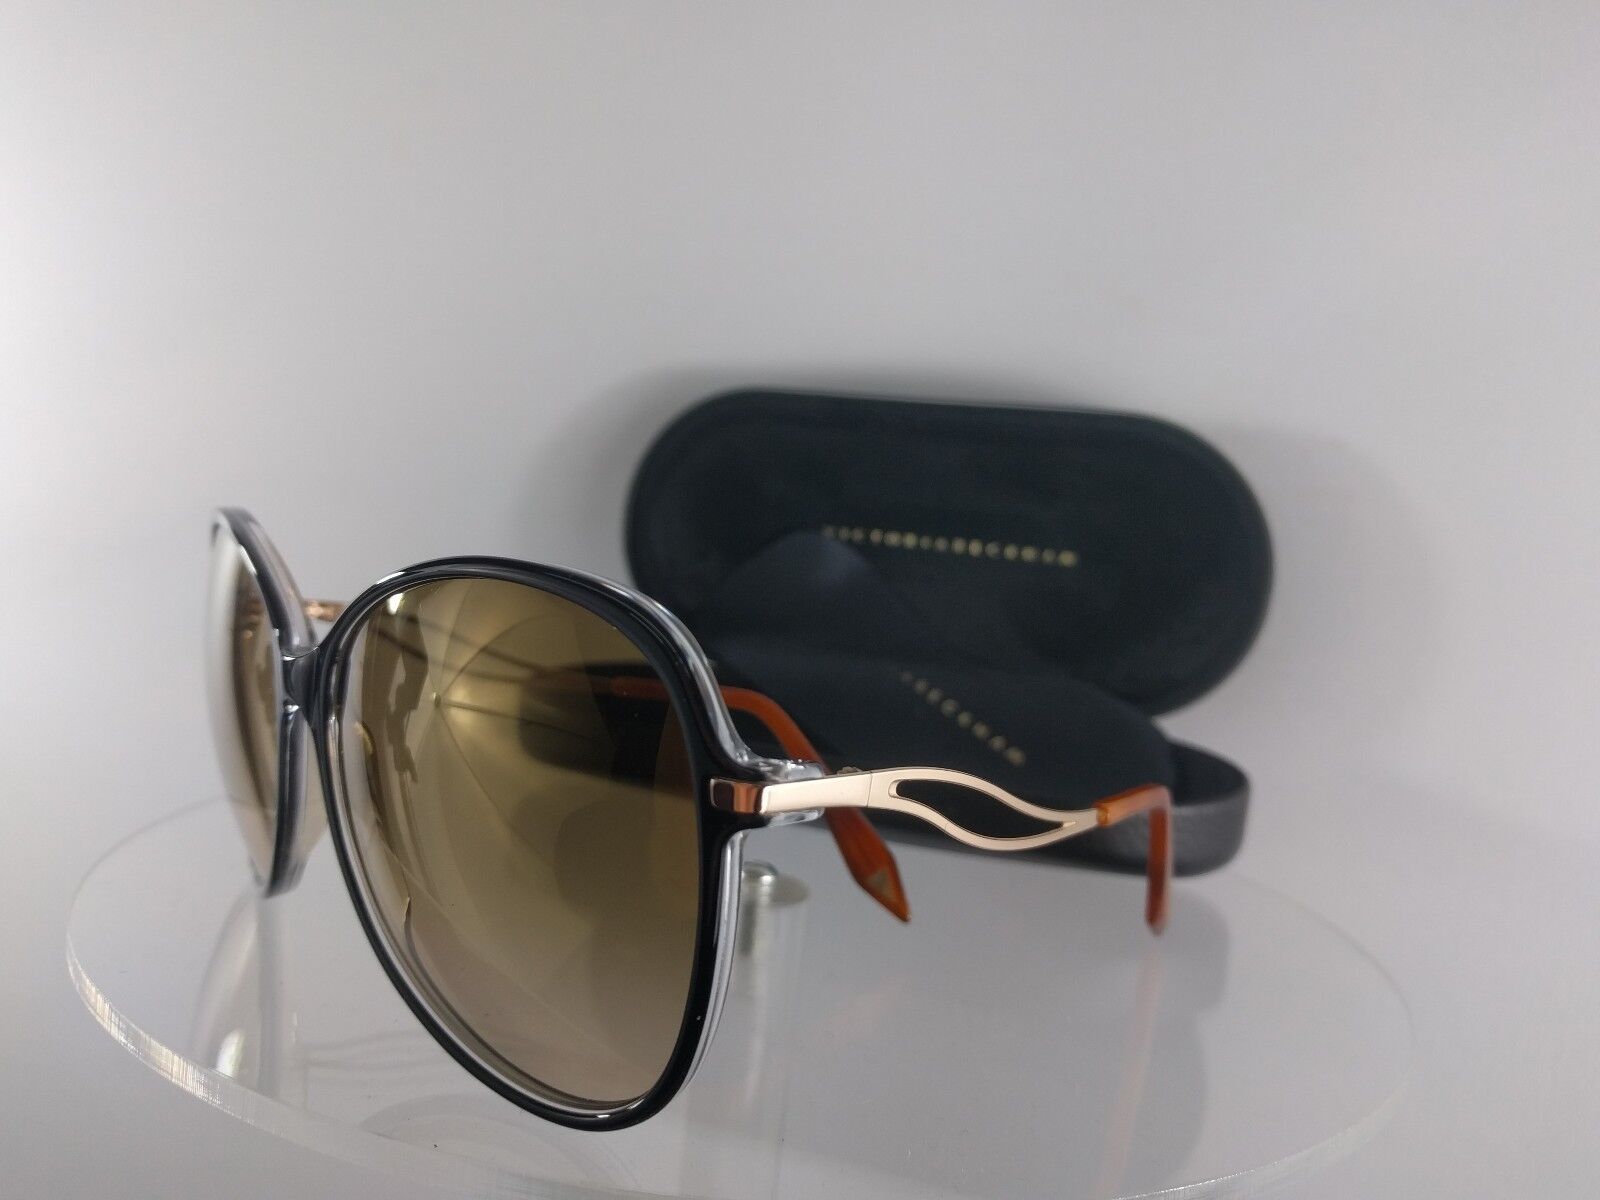 Brand New Authentic Victoria Beckham Sunglasses VBS 7 C01 07 Black Gold